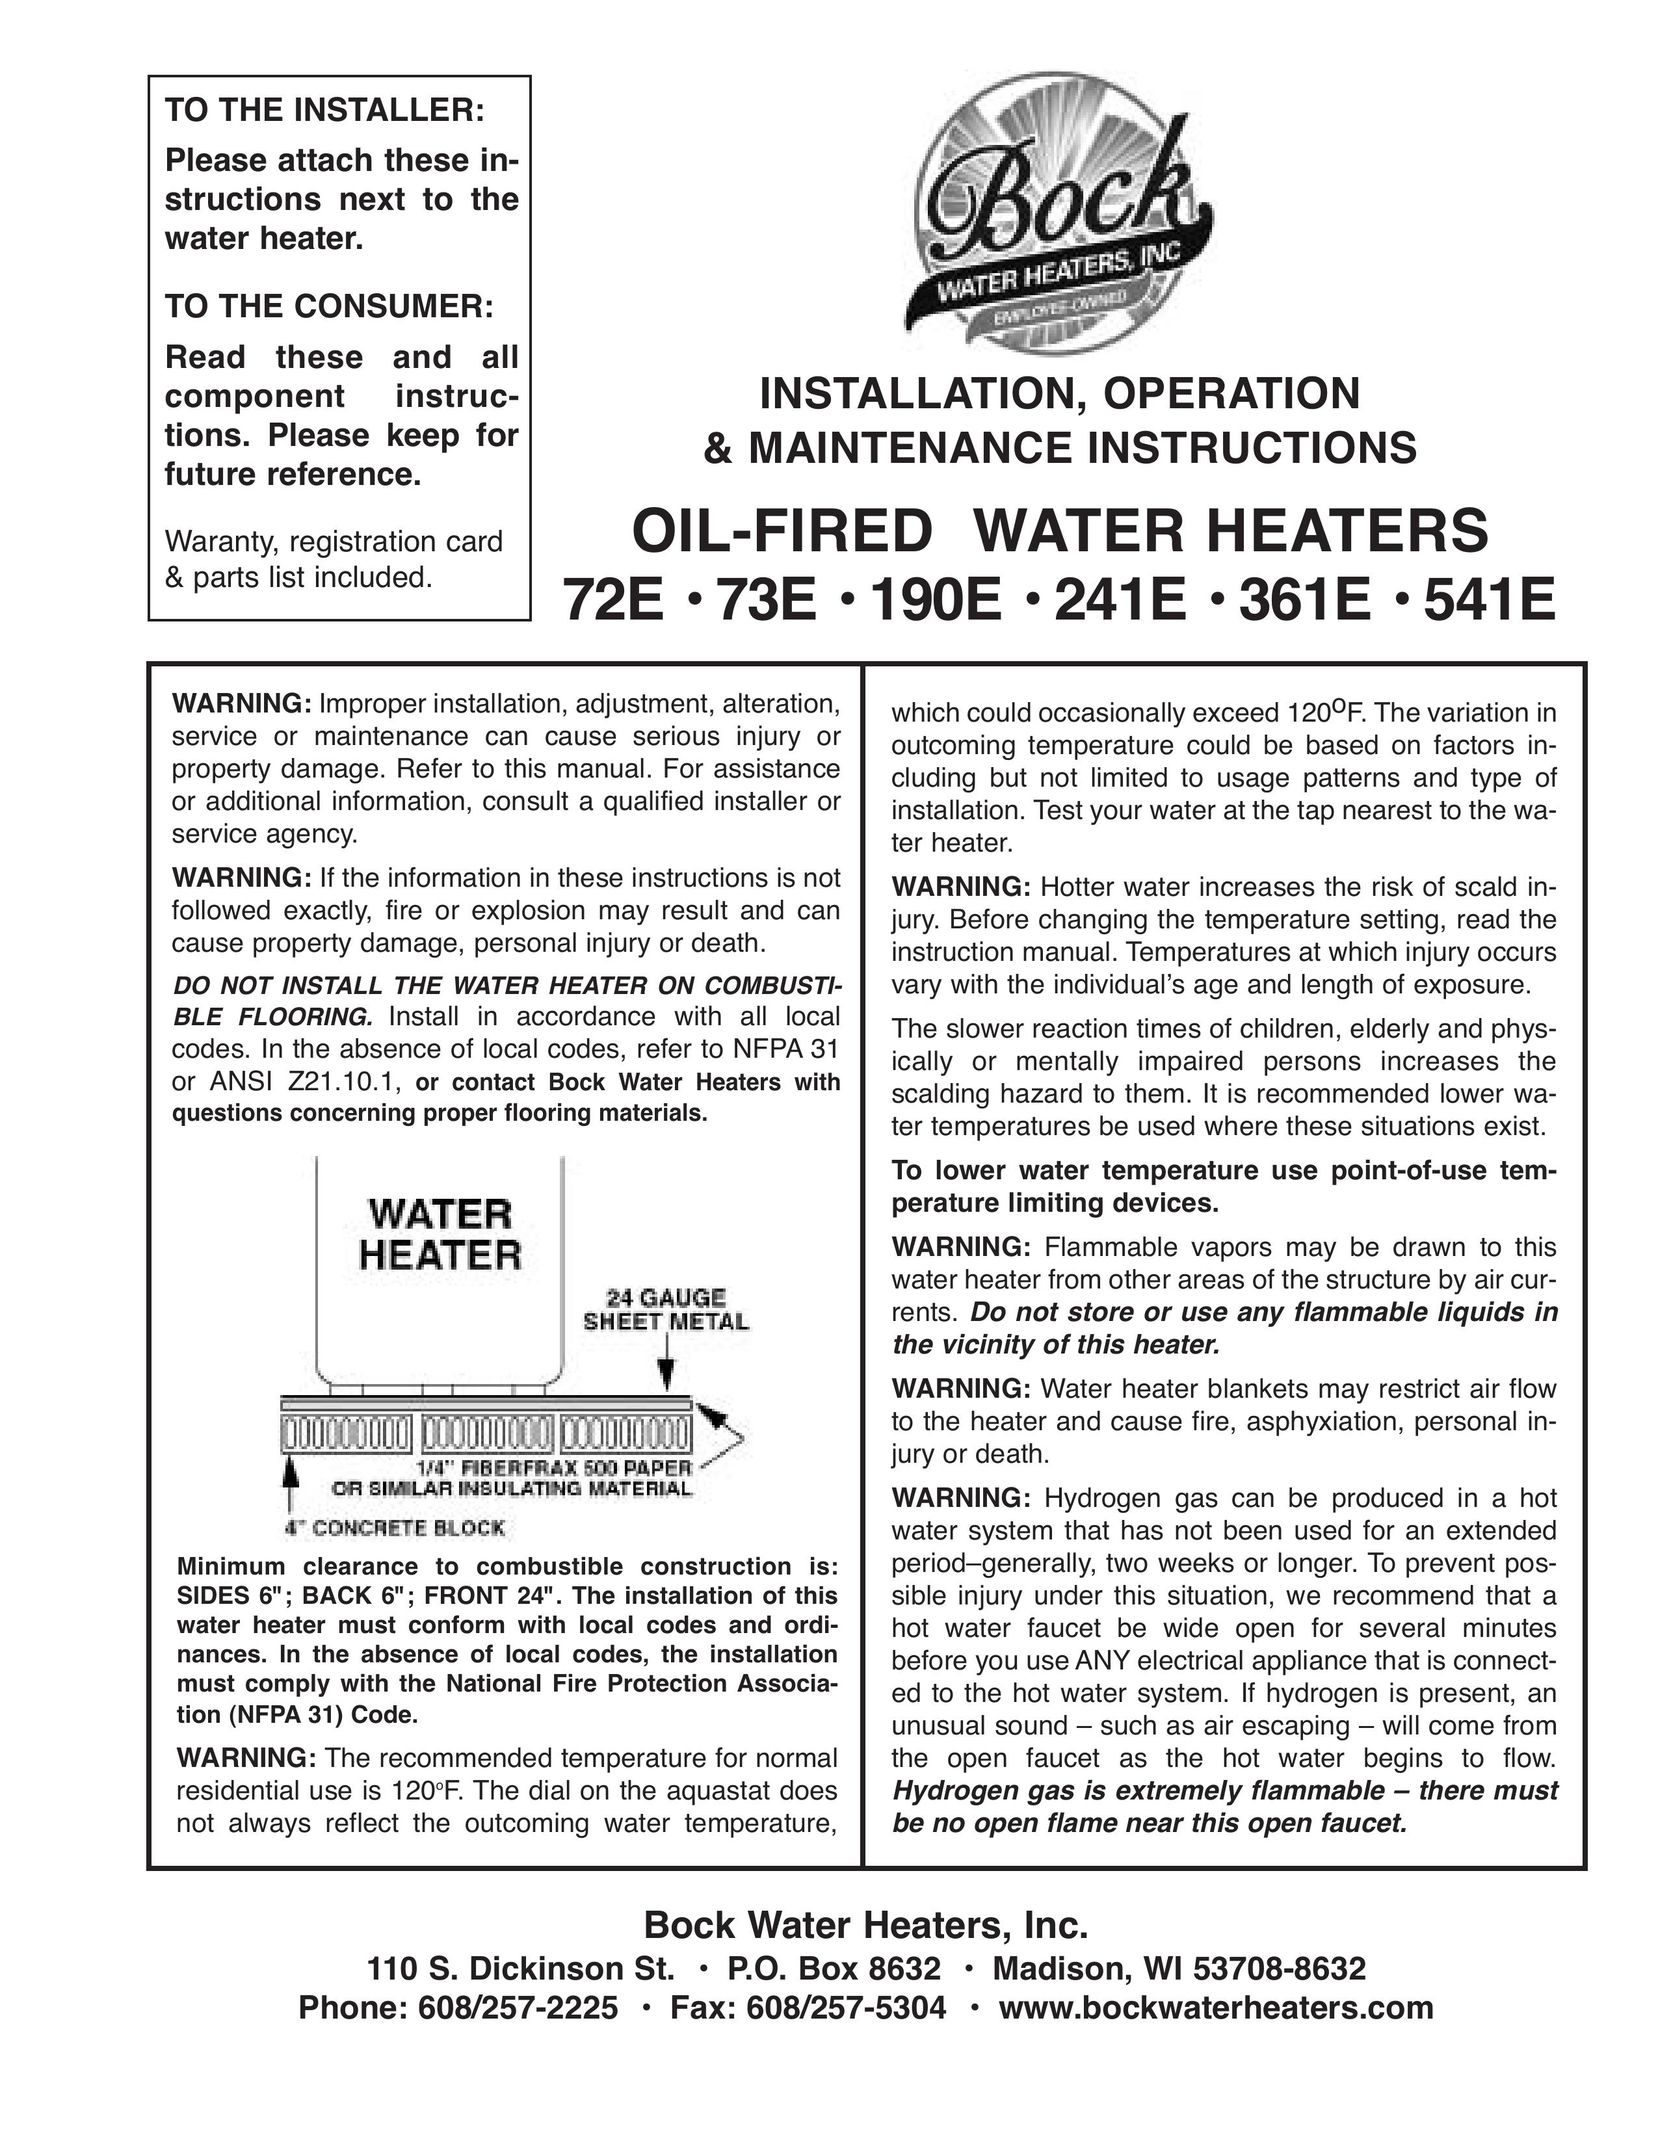 Bock Water heaters 361E Water Heater User Manual